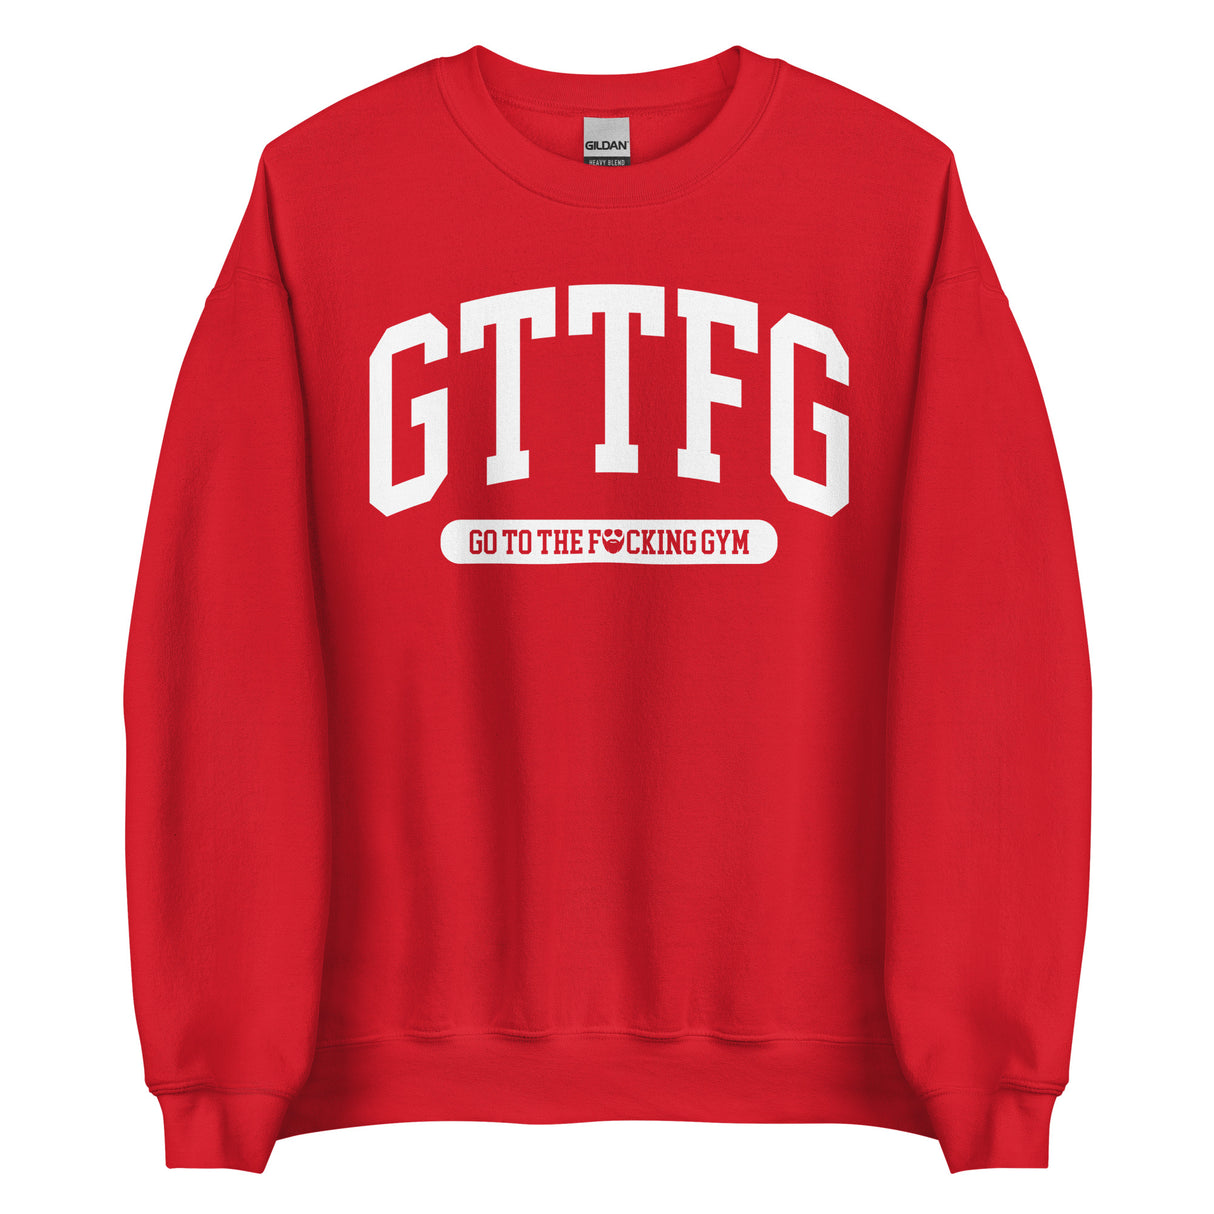 GTTFG College Sweatshirt